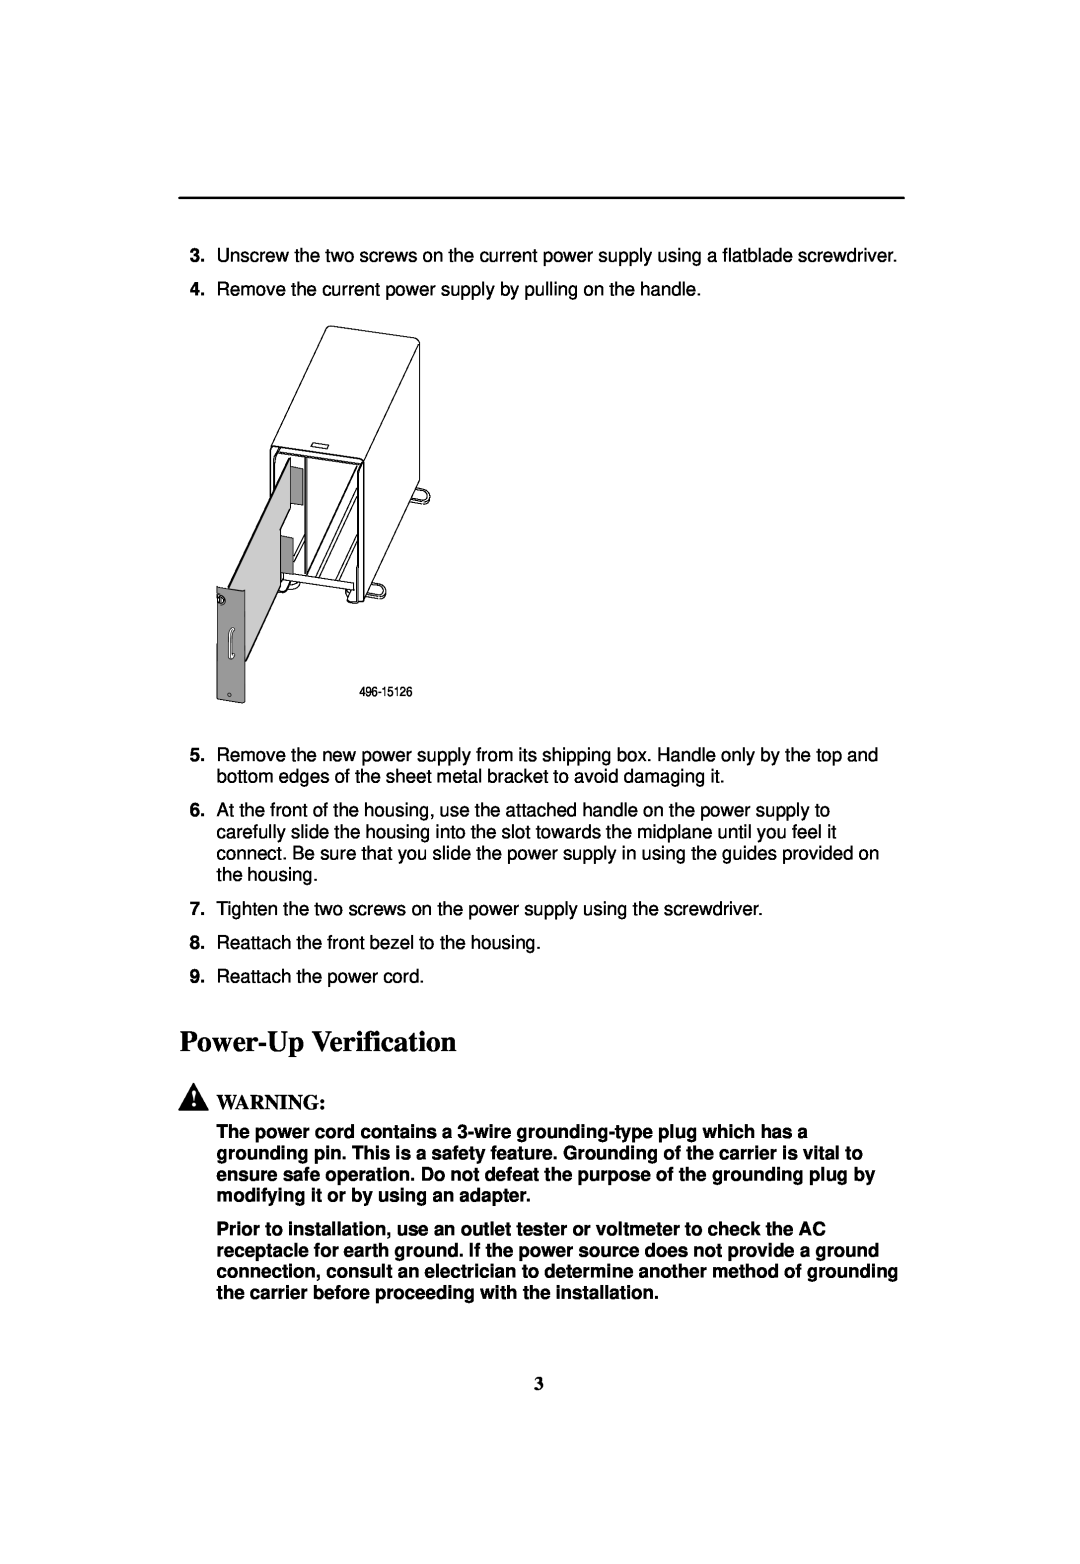 Paradyne 496-15149 installation instructions Power-Up Verification 